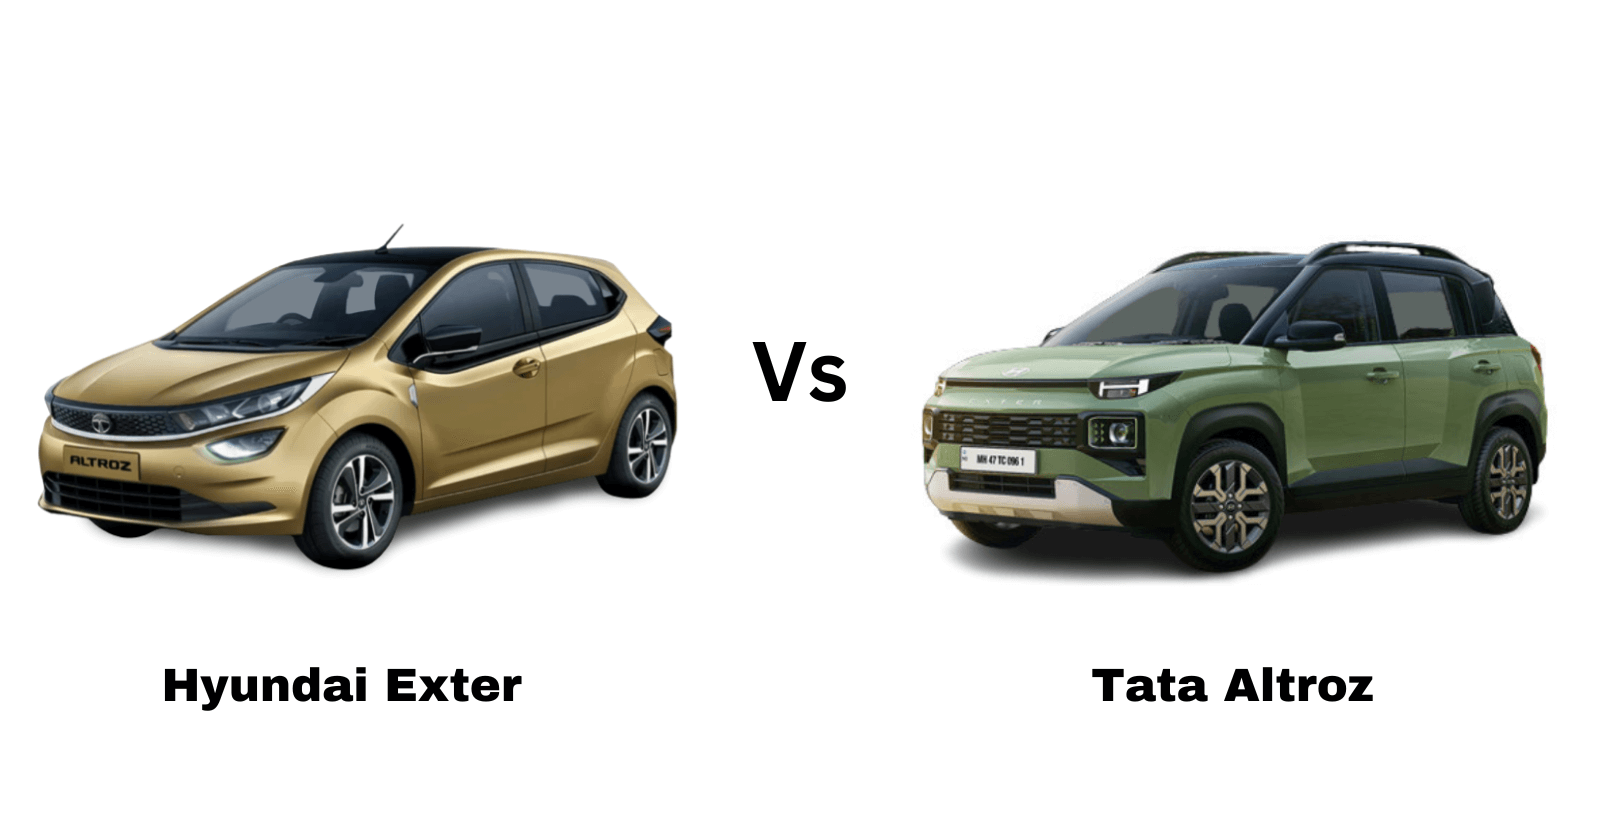 Hyundai Exter vs Tata Altroz
